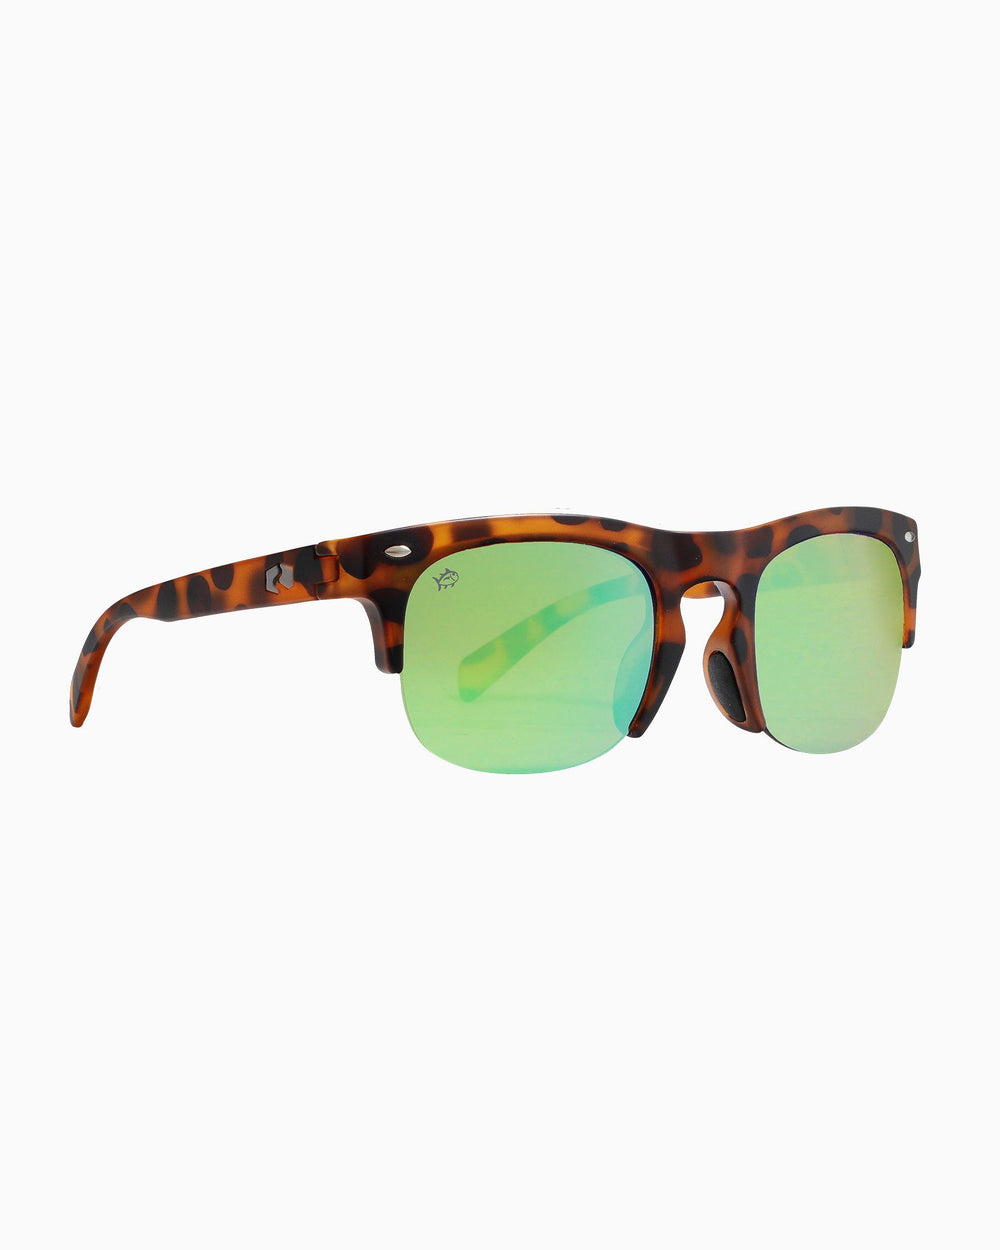 Men's Floatable Polarized Sunglasses